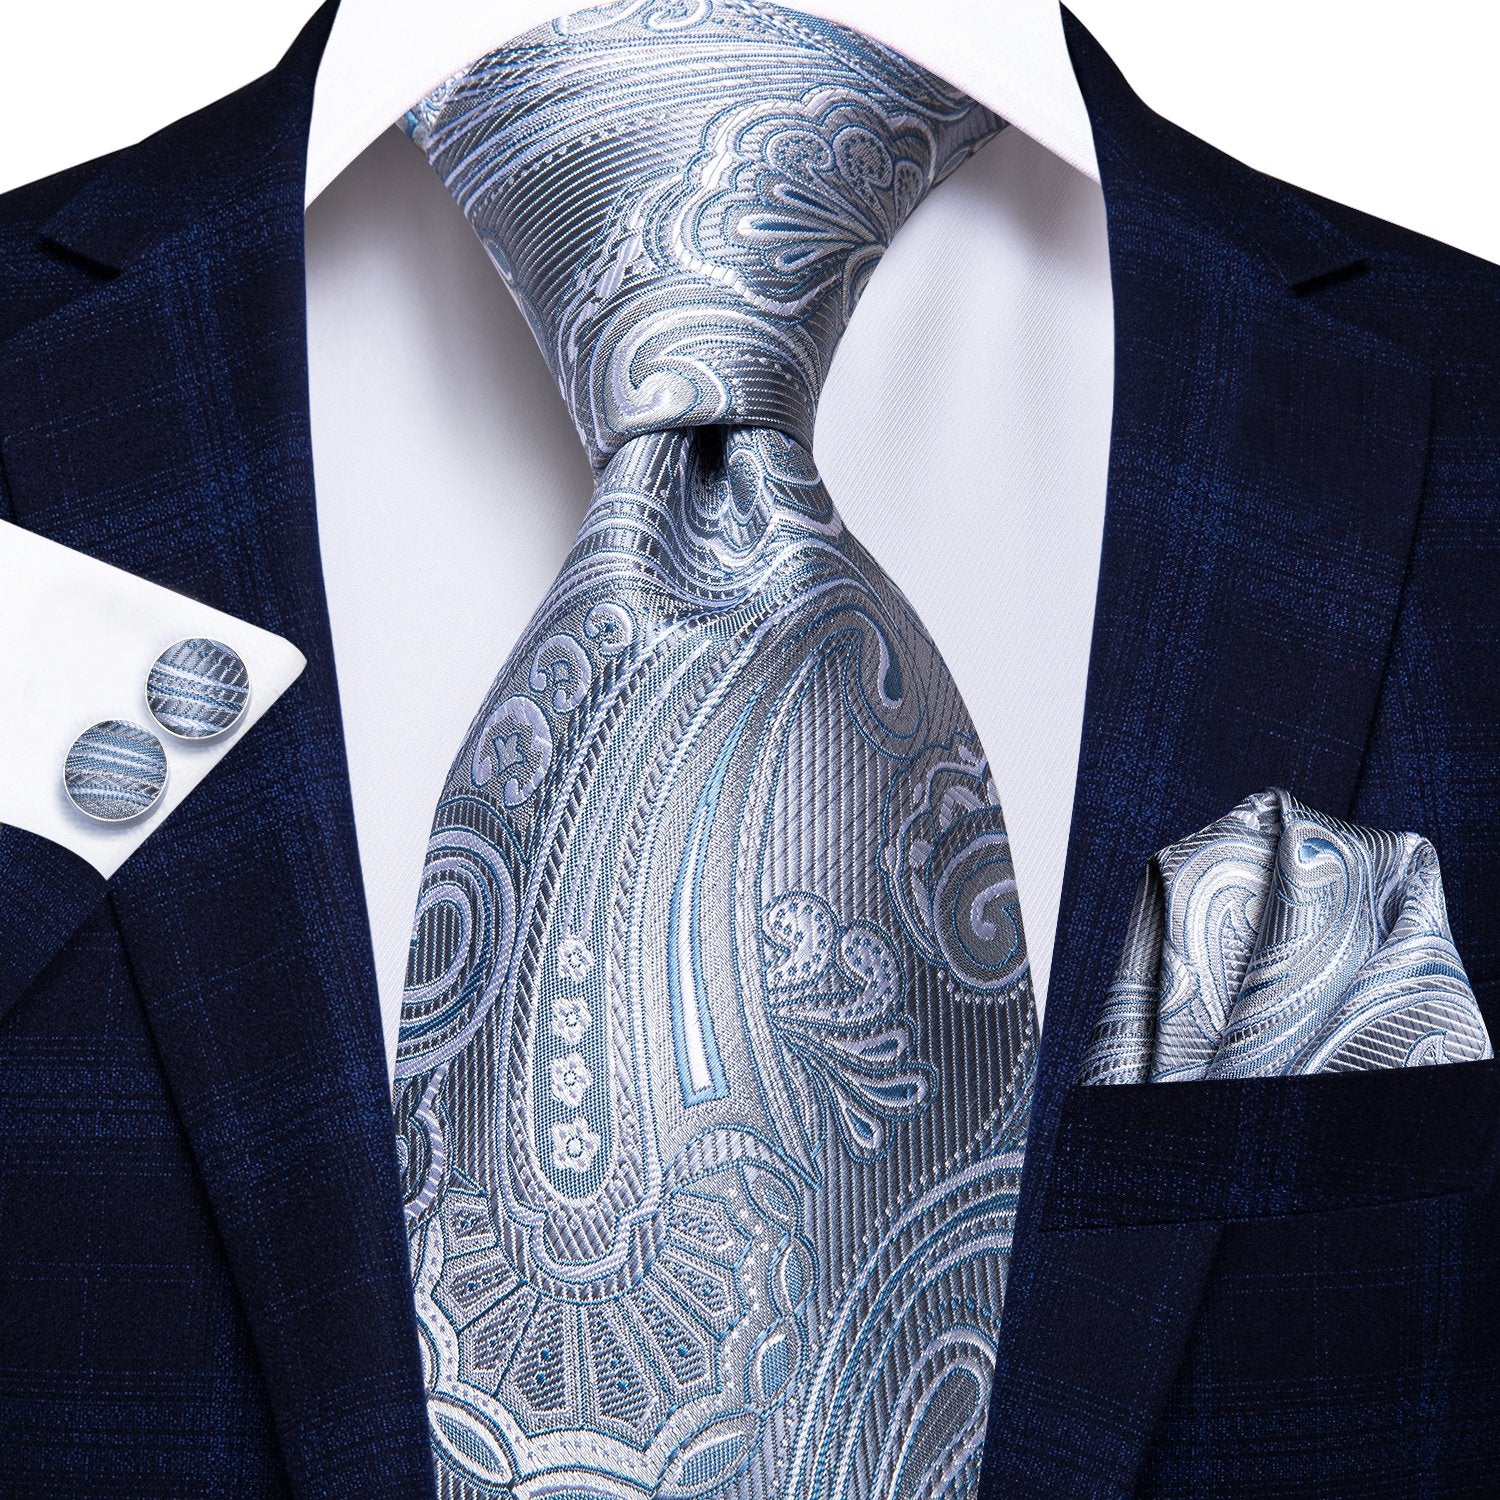 Silver Grey Paisley Tie Handkerchief Cufflinks Set with Wedding Brooch